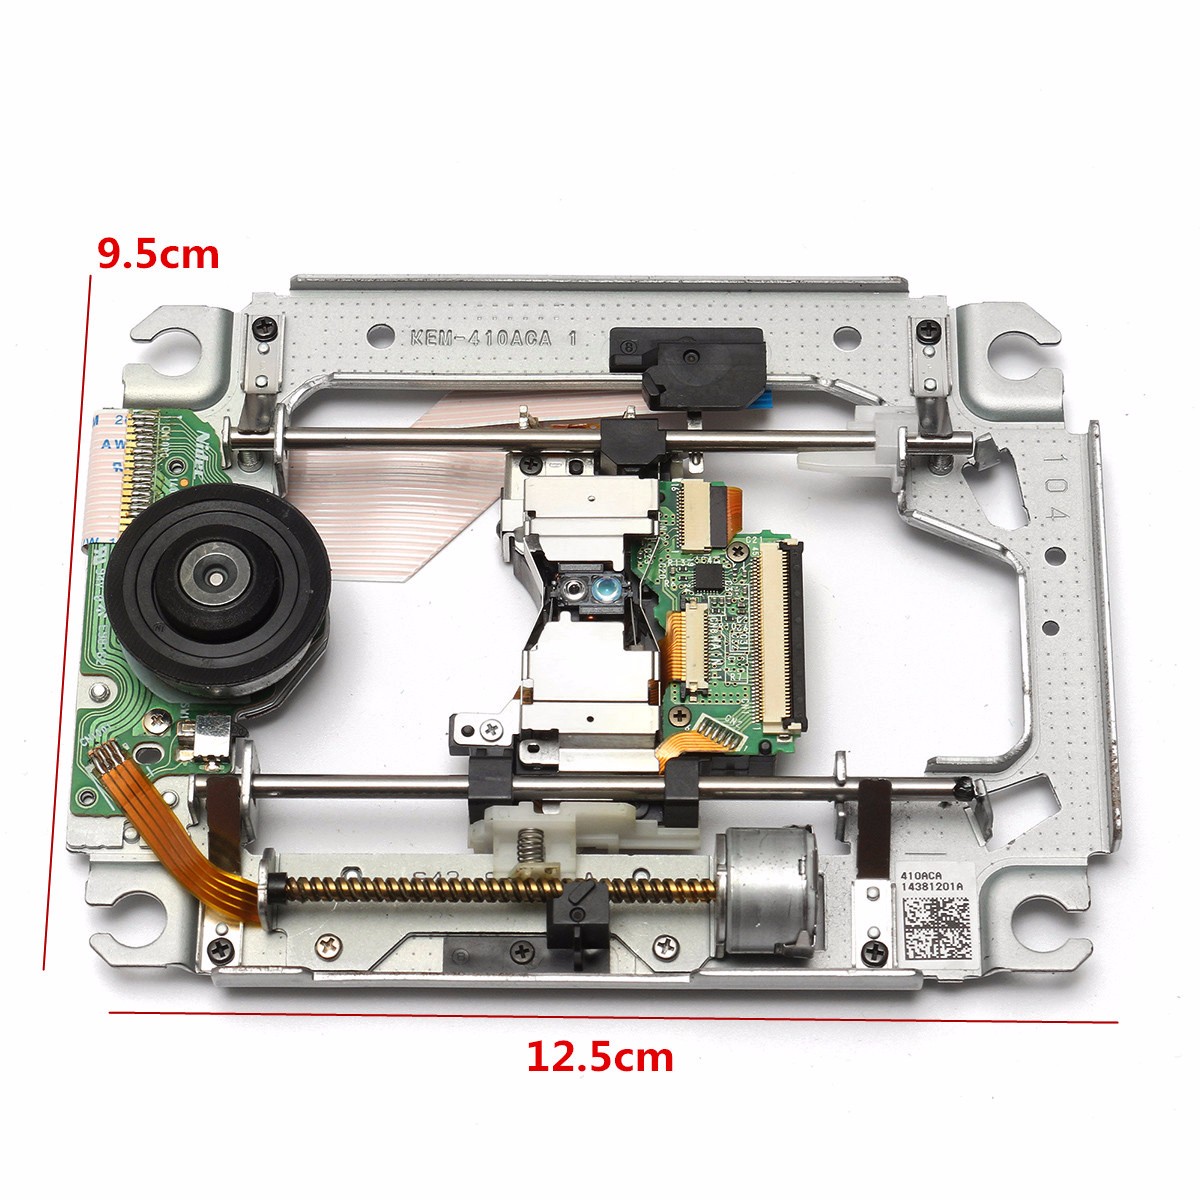 KES-410ACA/410A KEM-410ACA Laser Lens & Deck for Play Station 3 for PS3 Parts 43